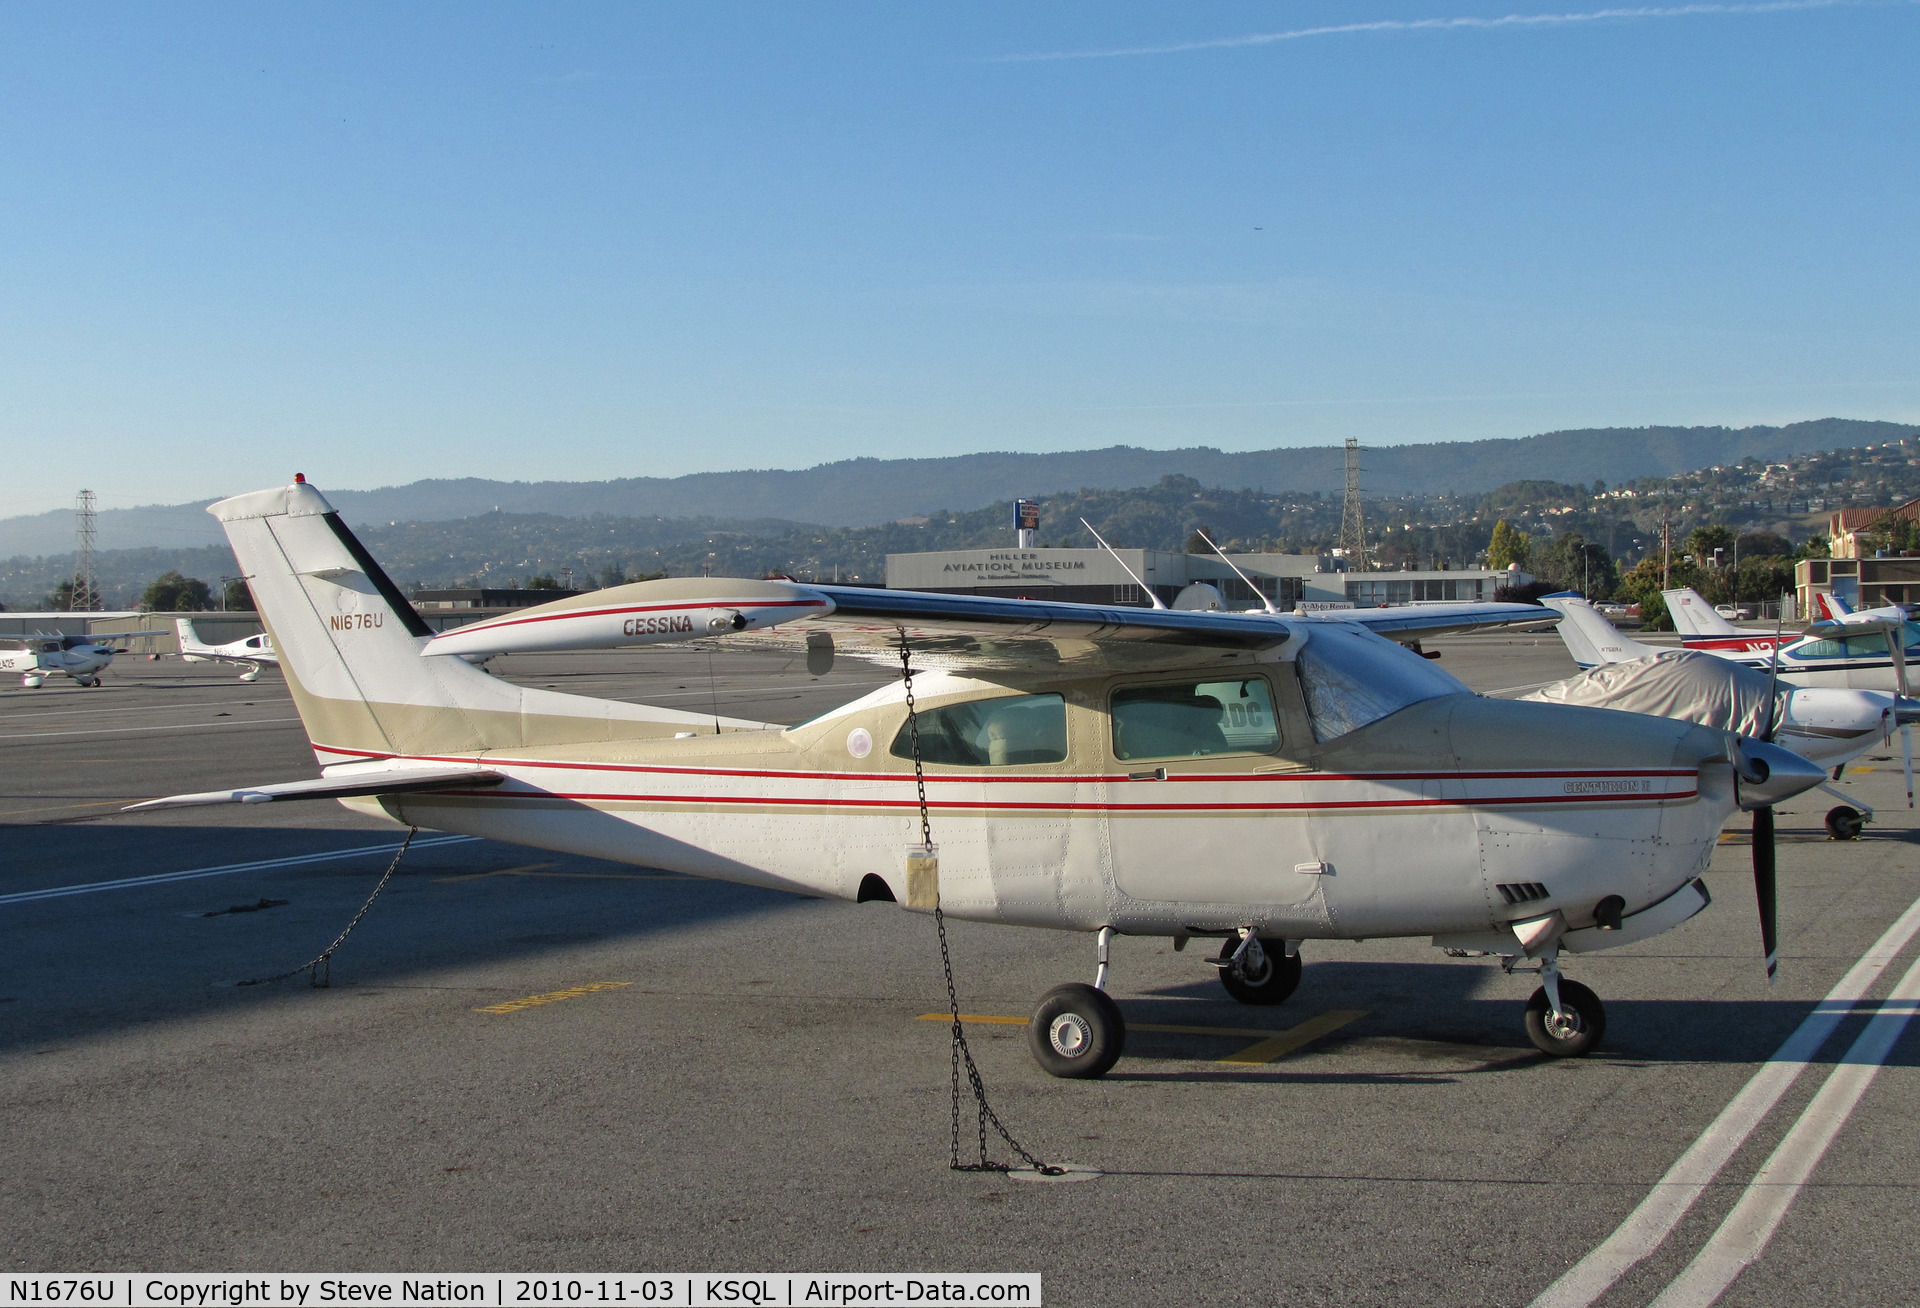 N1676U, 1982 Cessna T210N Turbo Centurion C/N 21064724, Digicam Corp (Woodland Hills, CA) operates this camera-equipped 1982 Cessna T210N visiting KSQL/San Carlos, CA